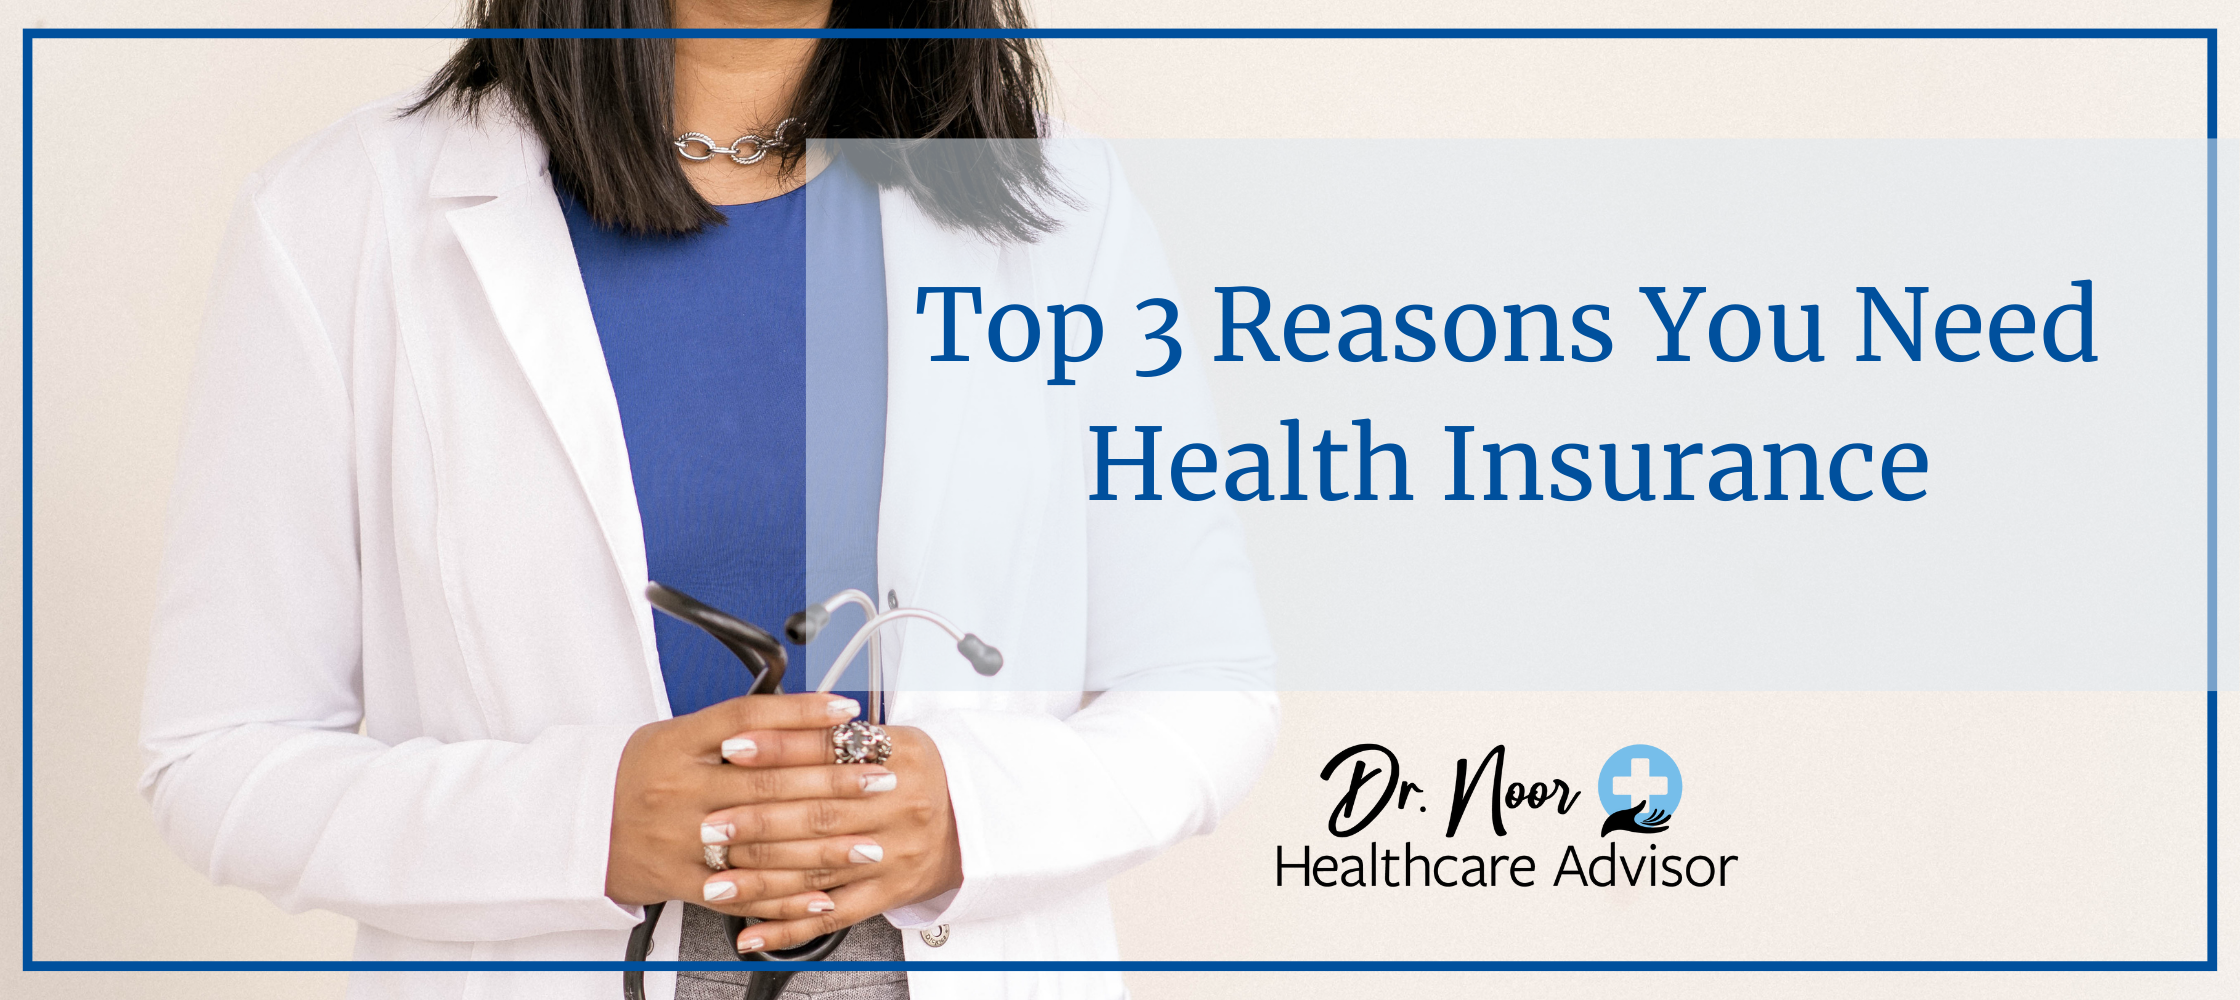 Top 3 Reasons You Need Health Insurance